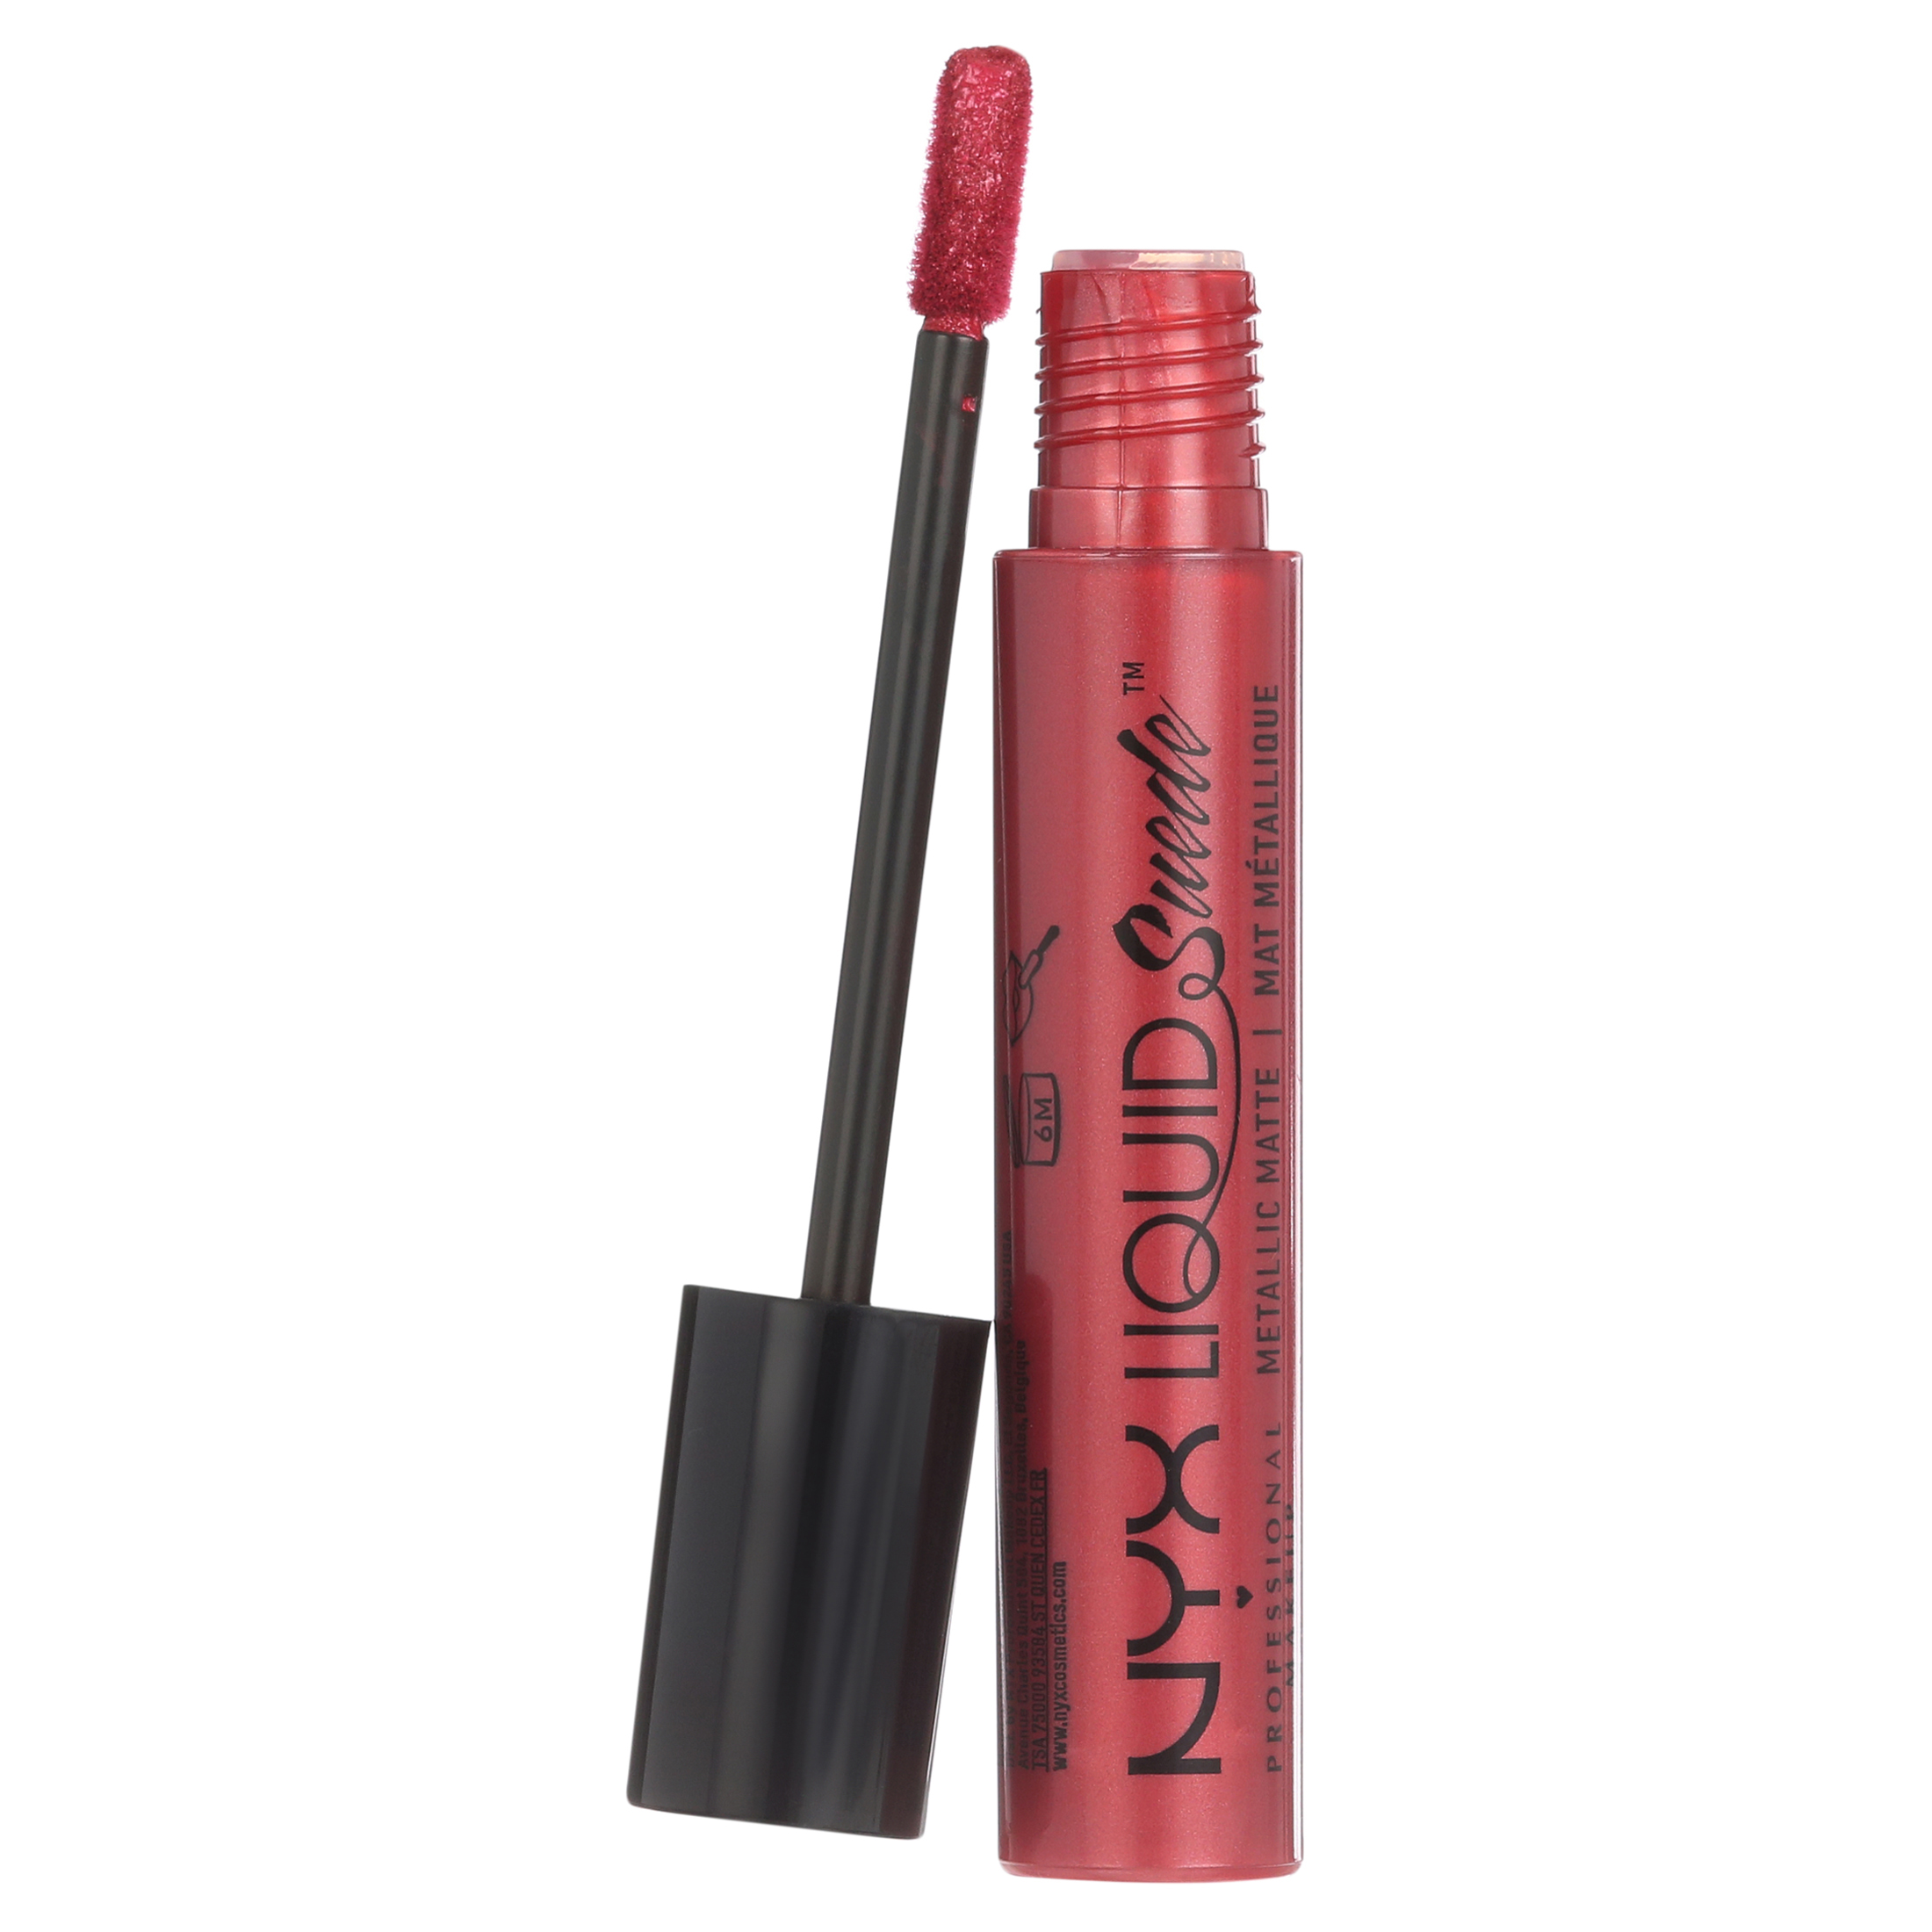 NYX Professional Makeup Liquid Suede Metallic Matte Cream Lipstick, Acme - image 3 of 7